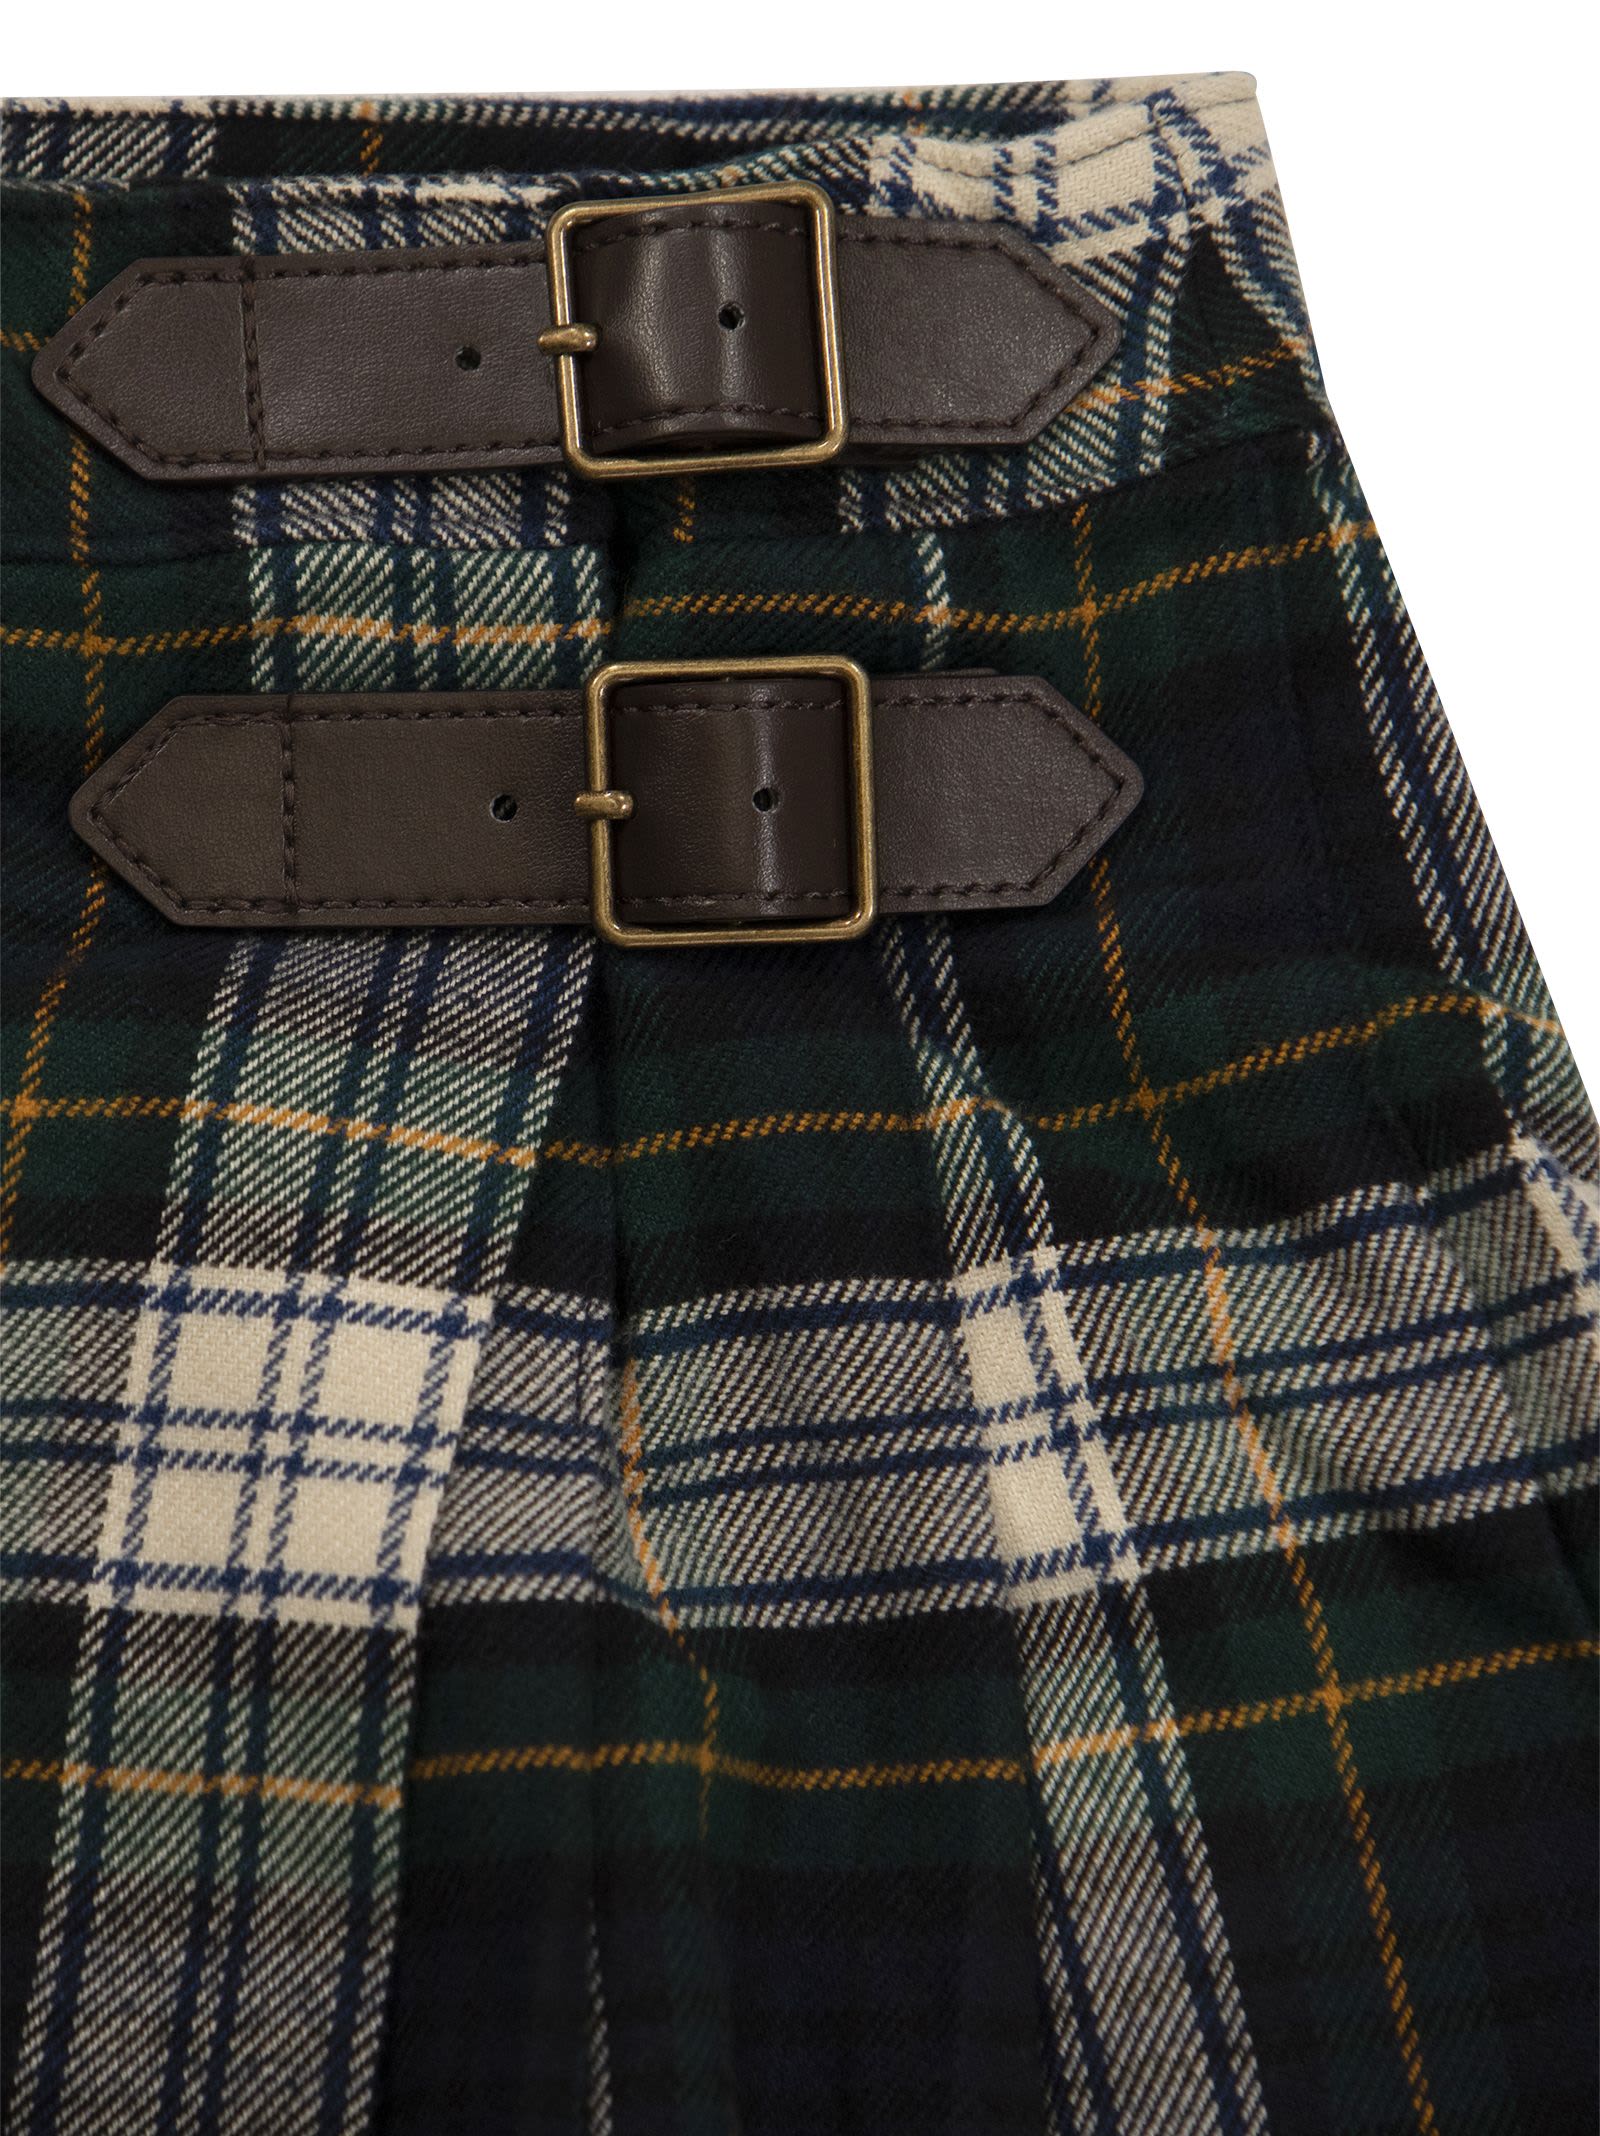 Shop Ralph Lauren Cotton Twill Plaid Skirt In Multi